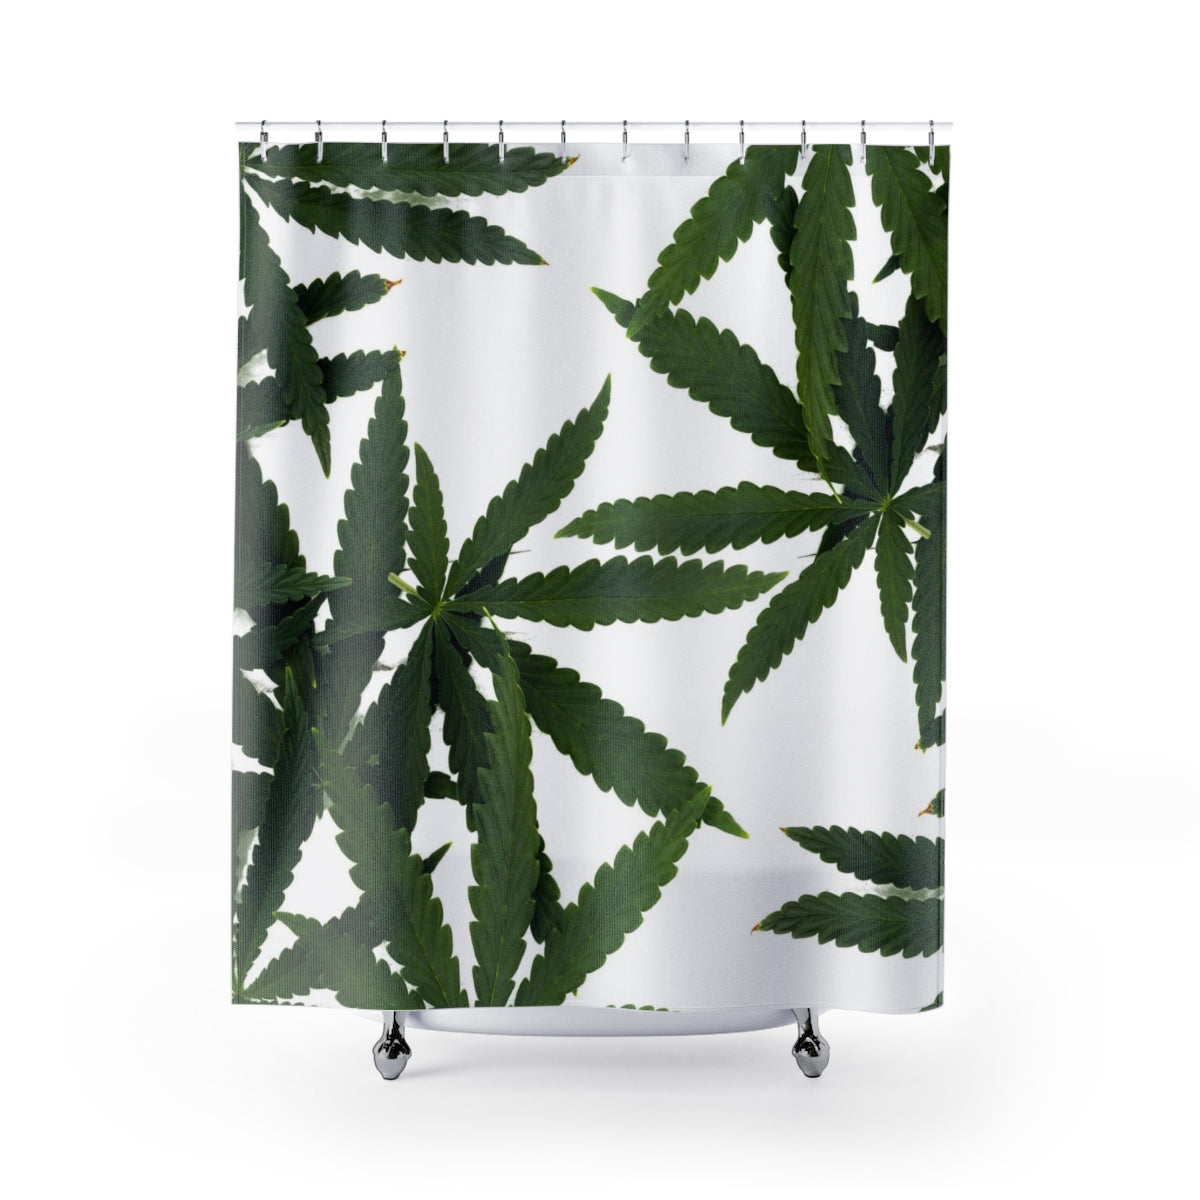 It's Cannabis Shower Curtain